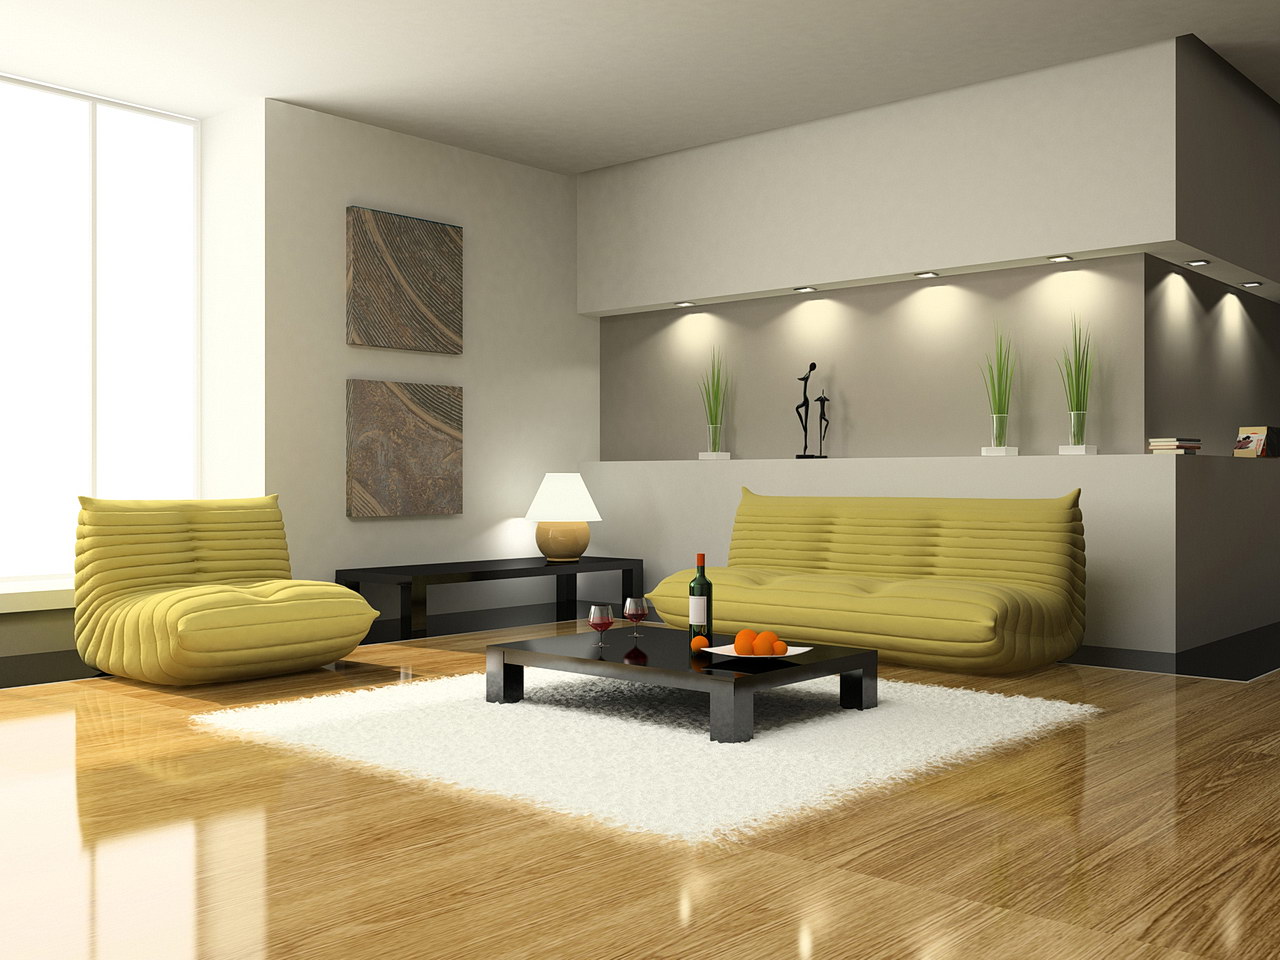 lighting design for a living room